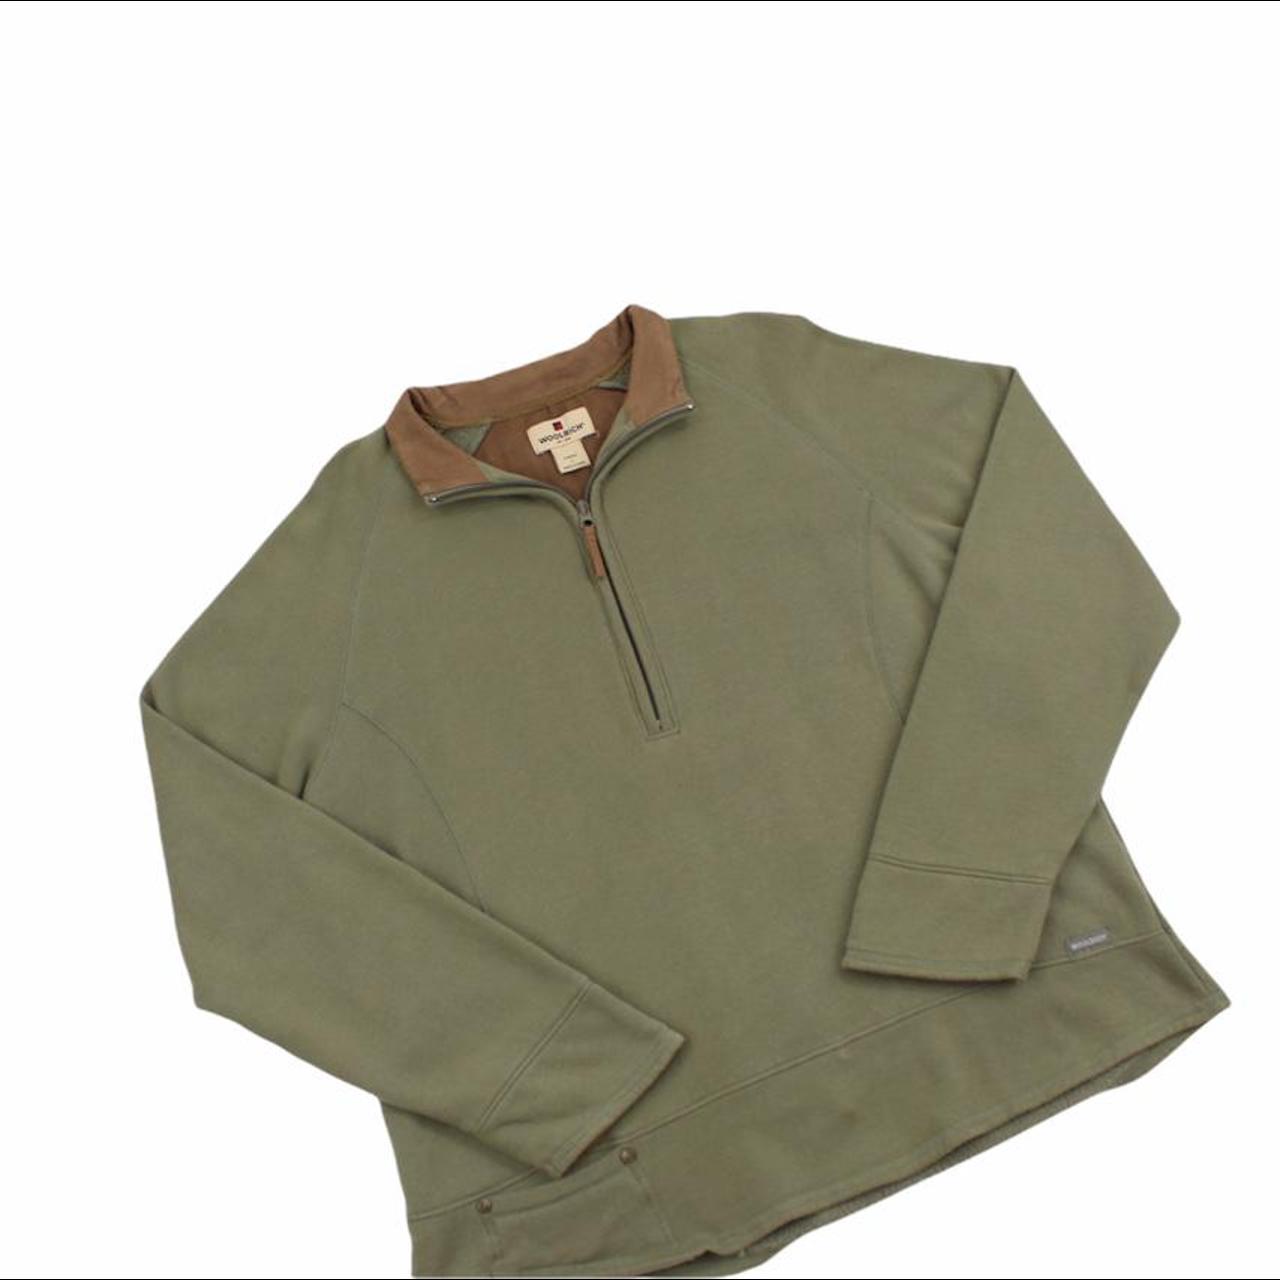 Product Image 2 - Woolrich quarter zip sweatshirt 🔥

The